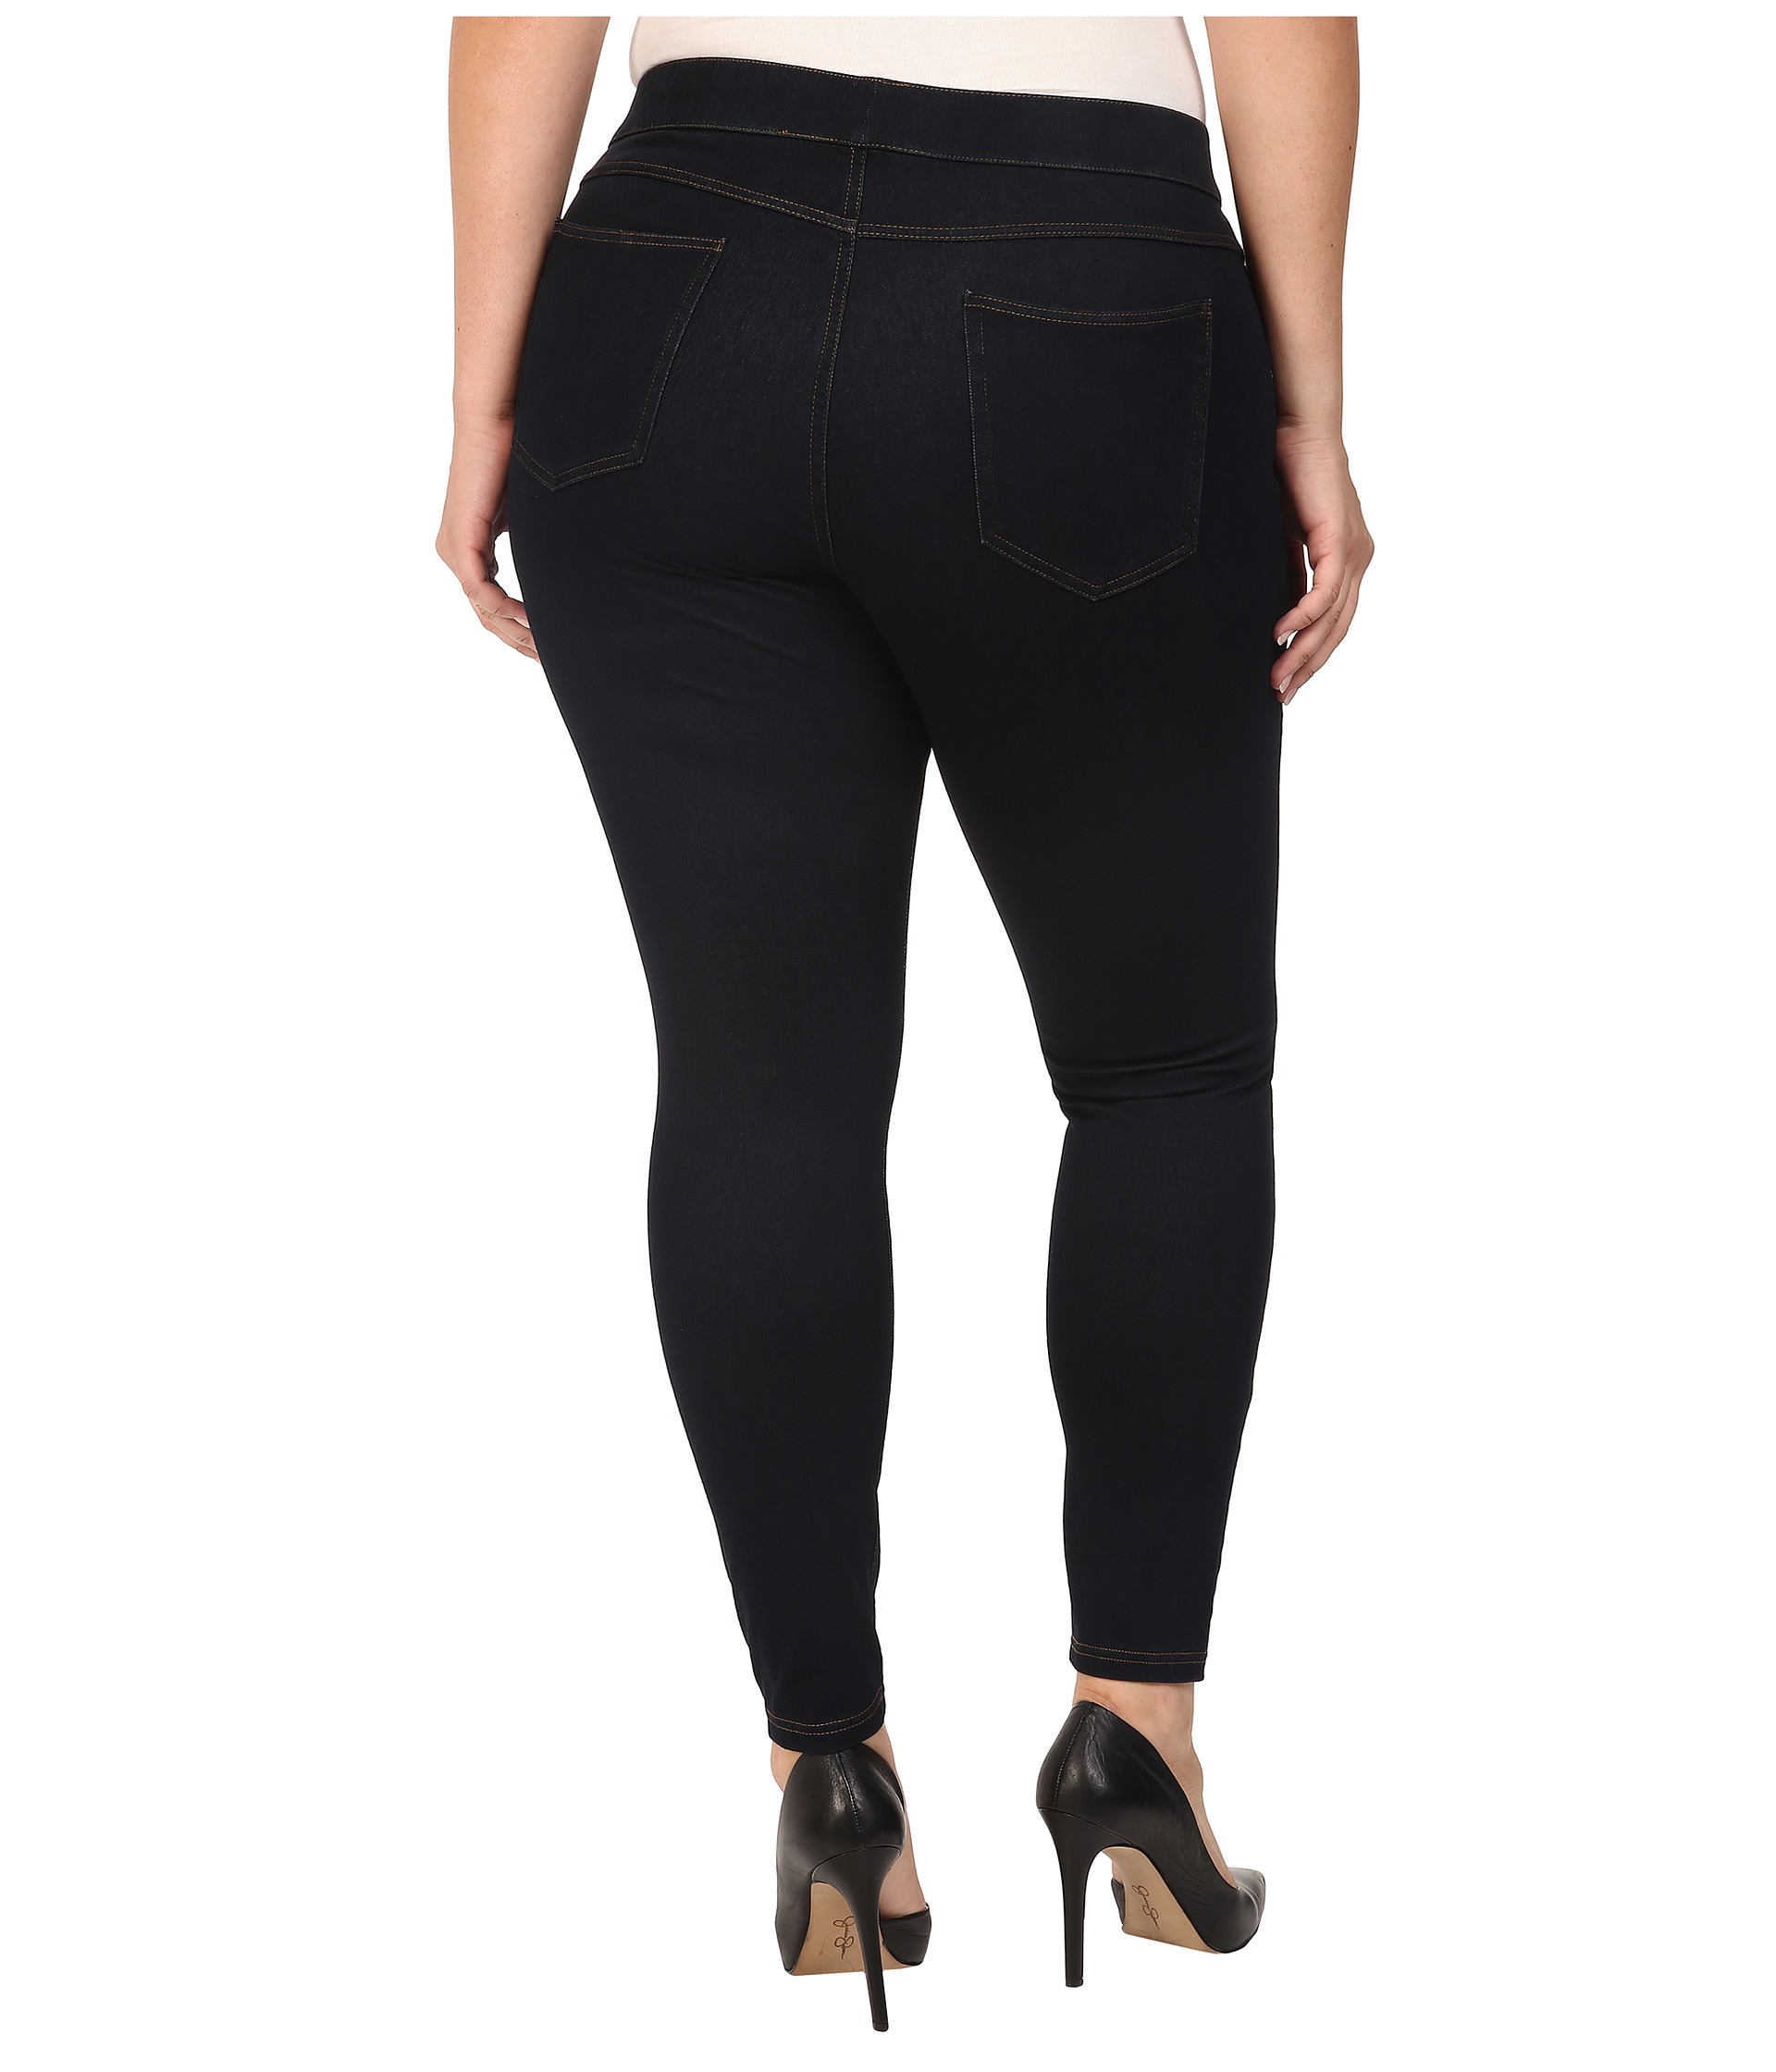 HUE Plus Size Curvy Fit Jeans Leggings at Zappos.com